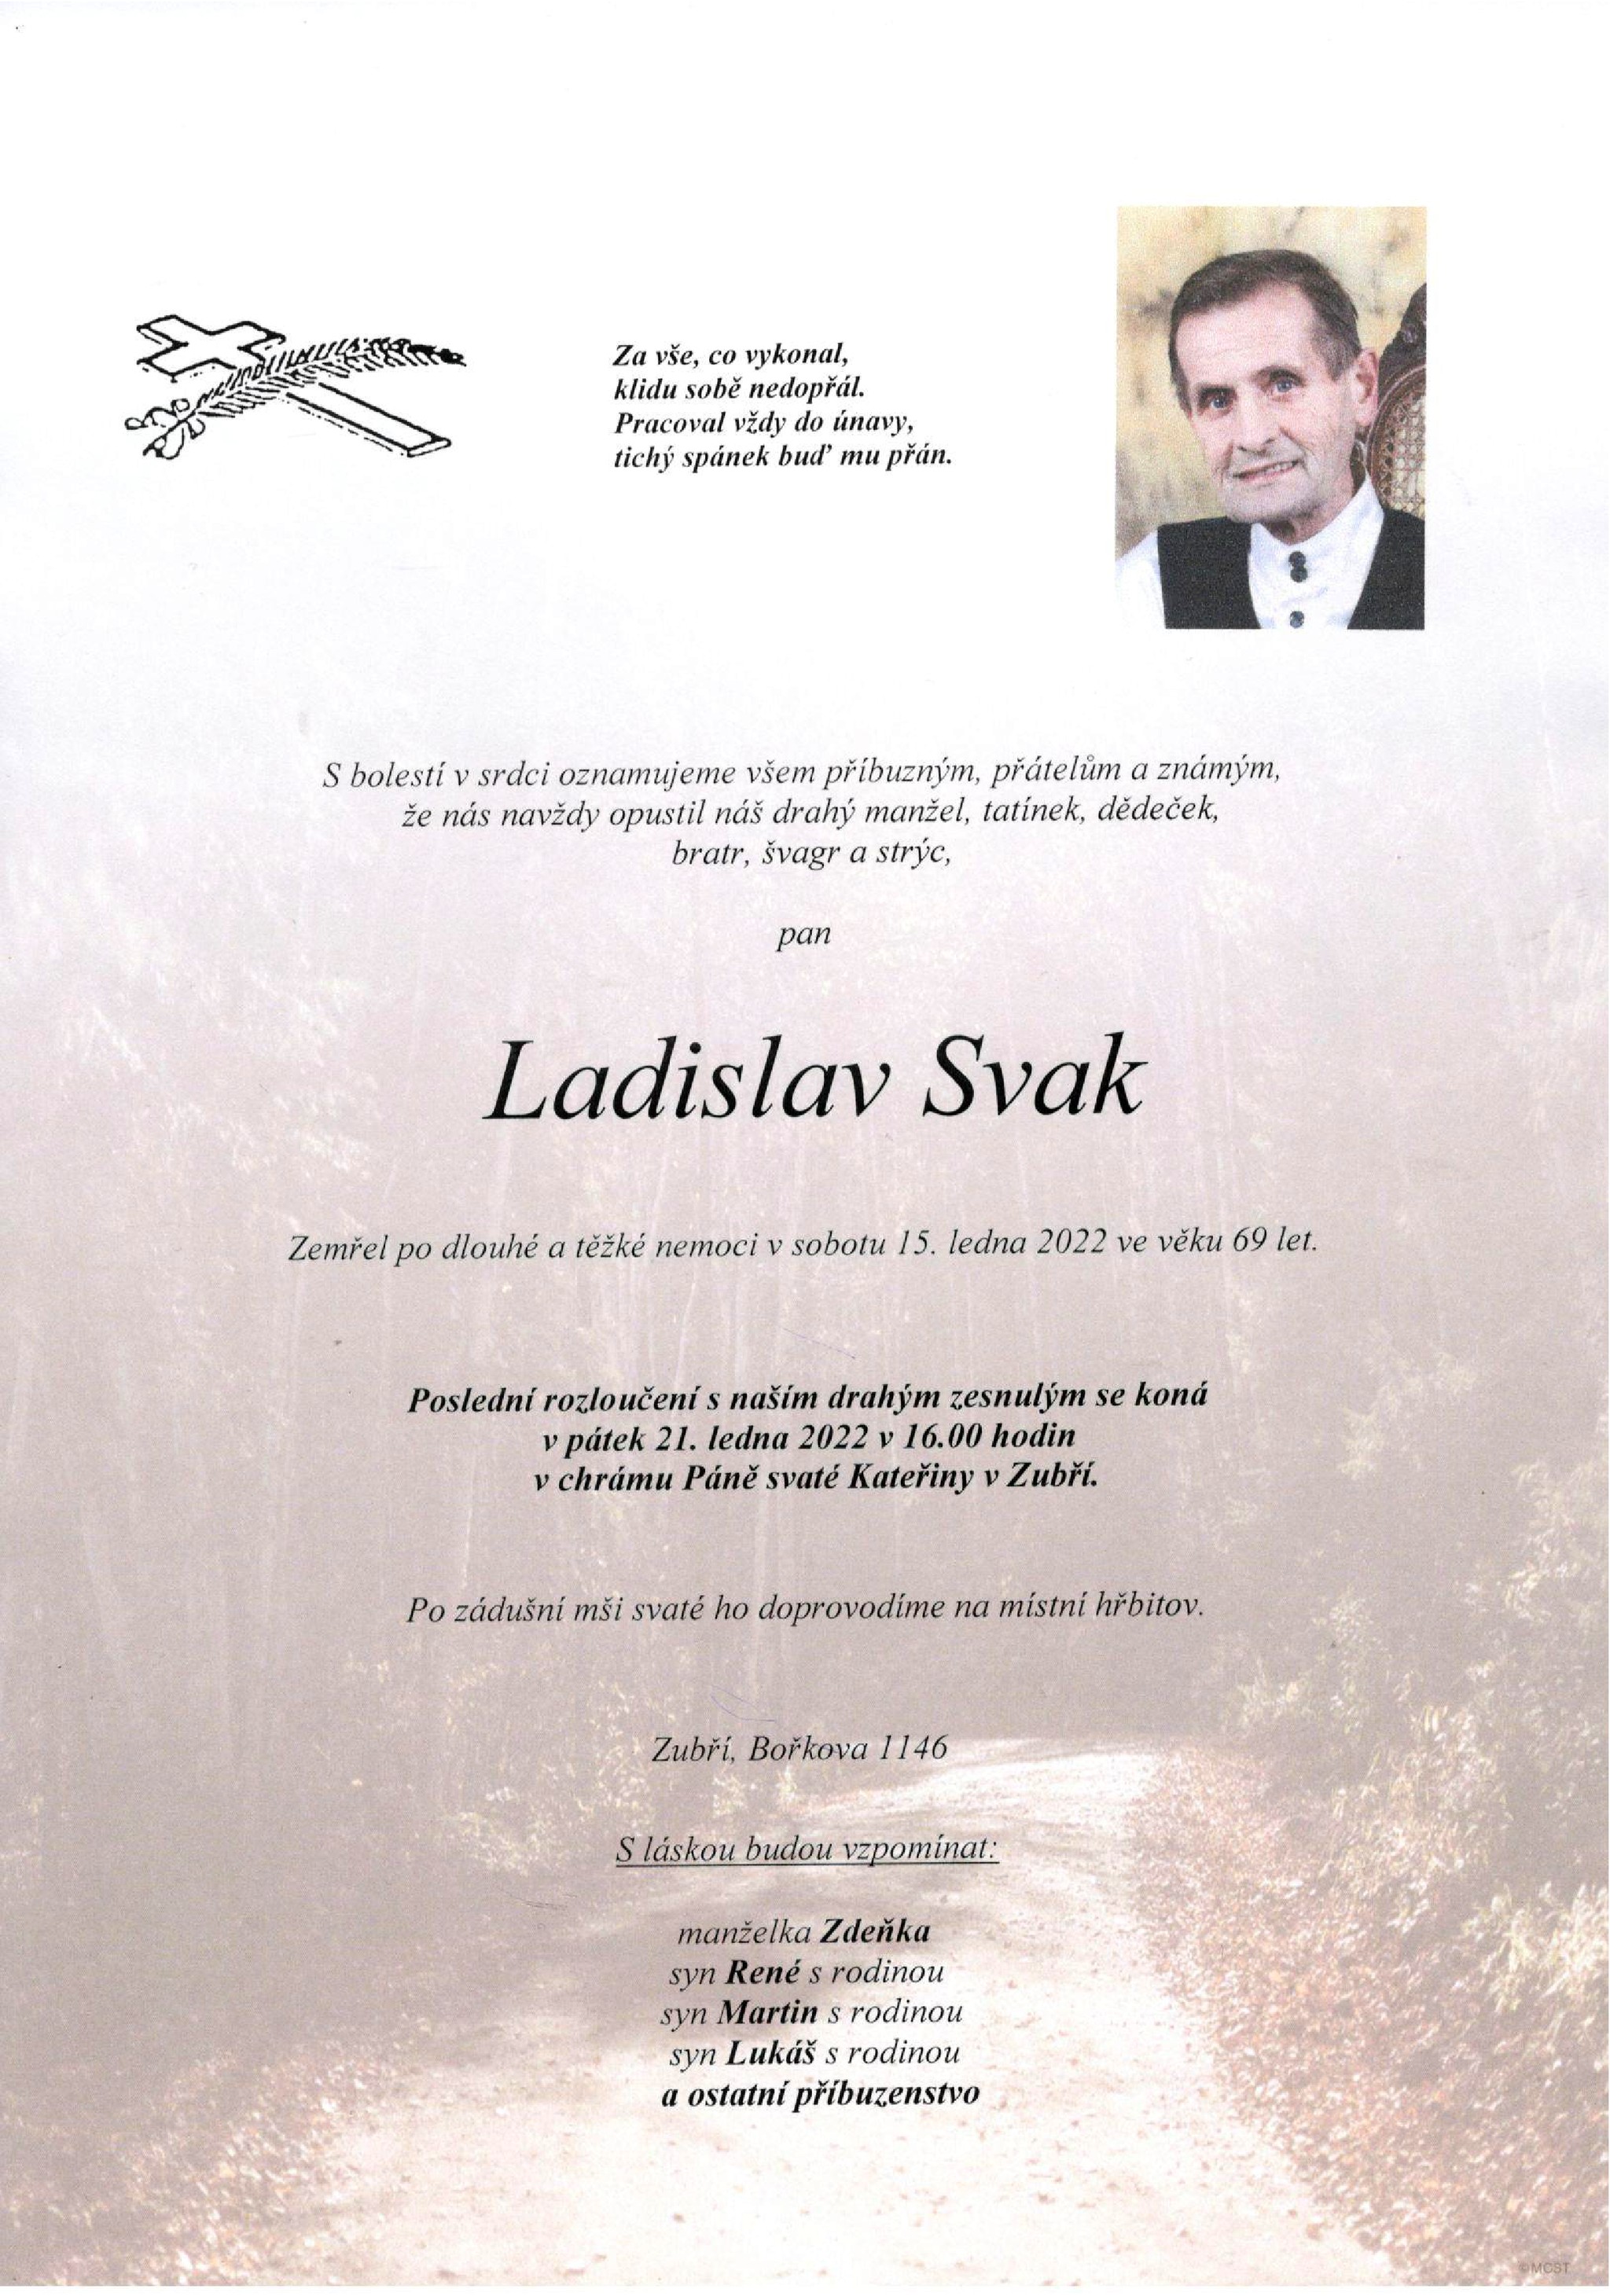 Ladislav Svak